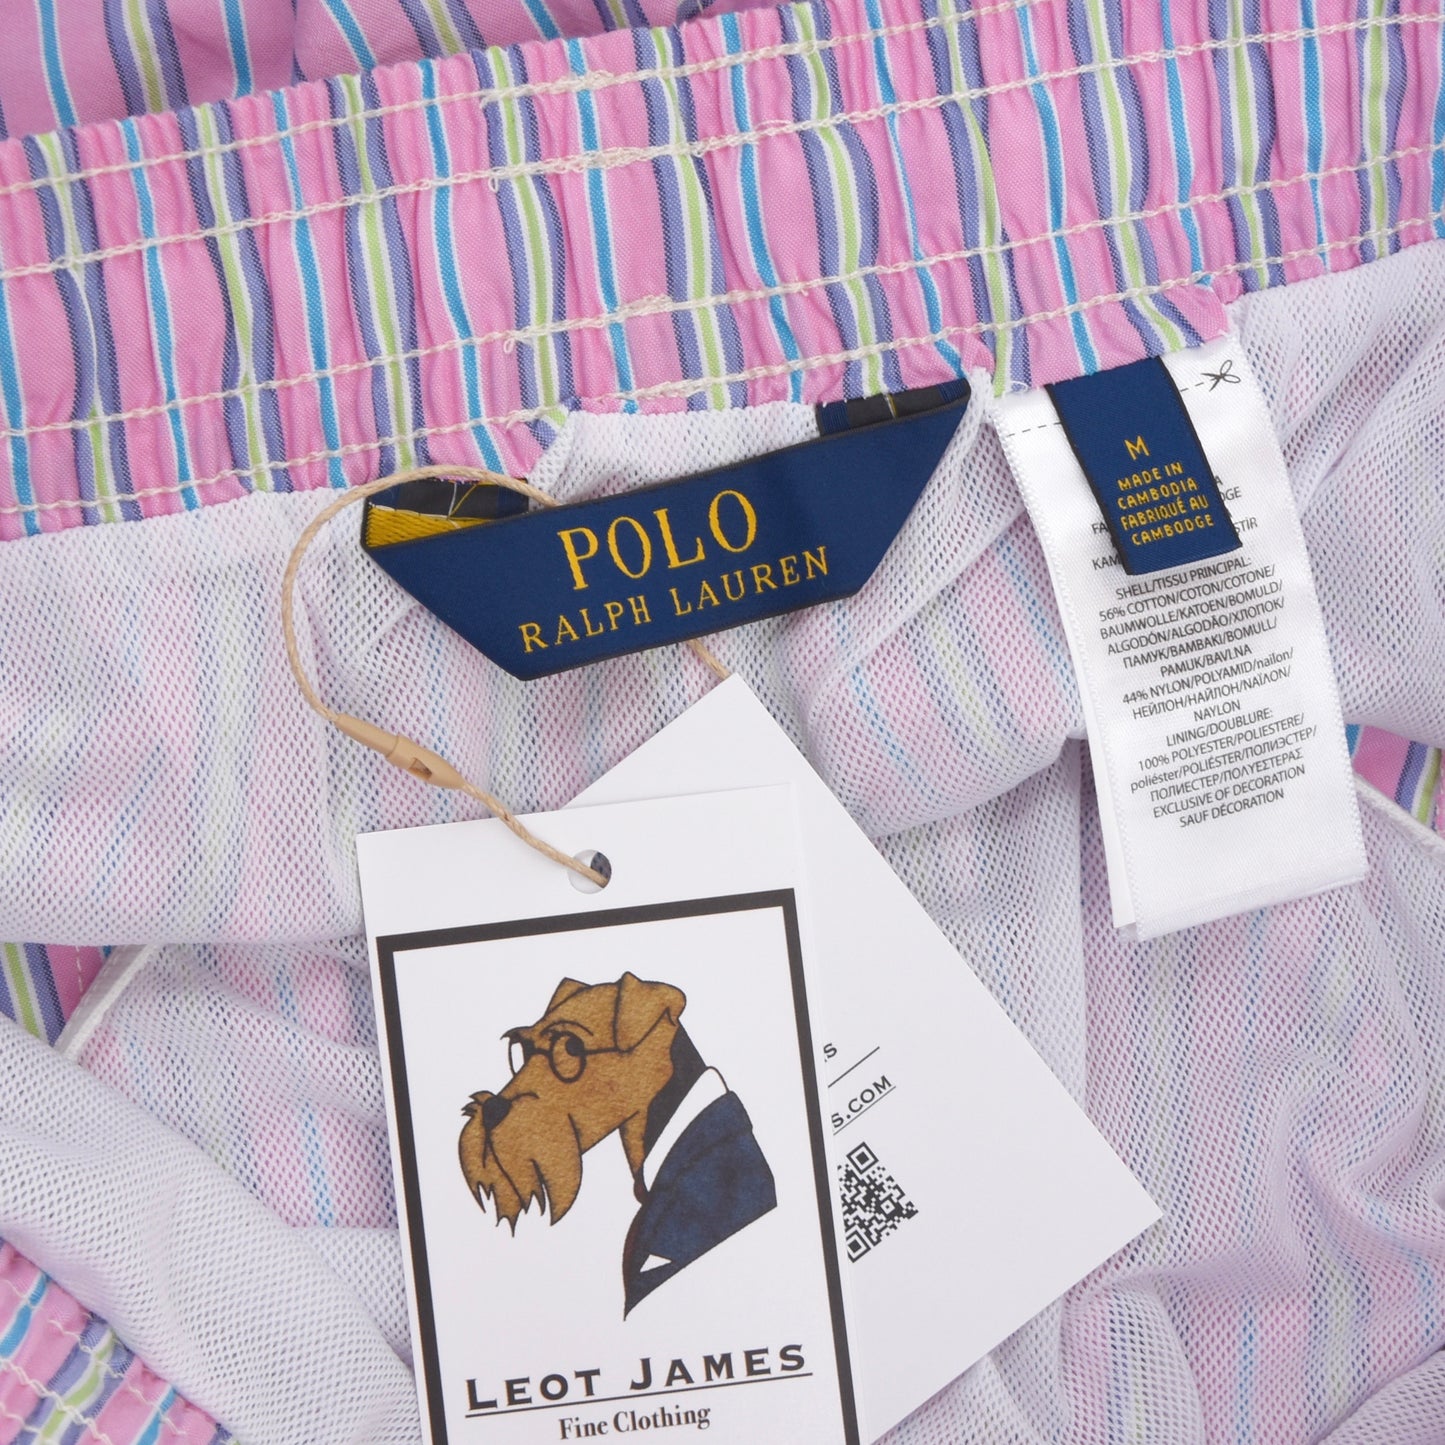 Polo Ralph Lauren Swim Trunks Size M - Pink Stripes